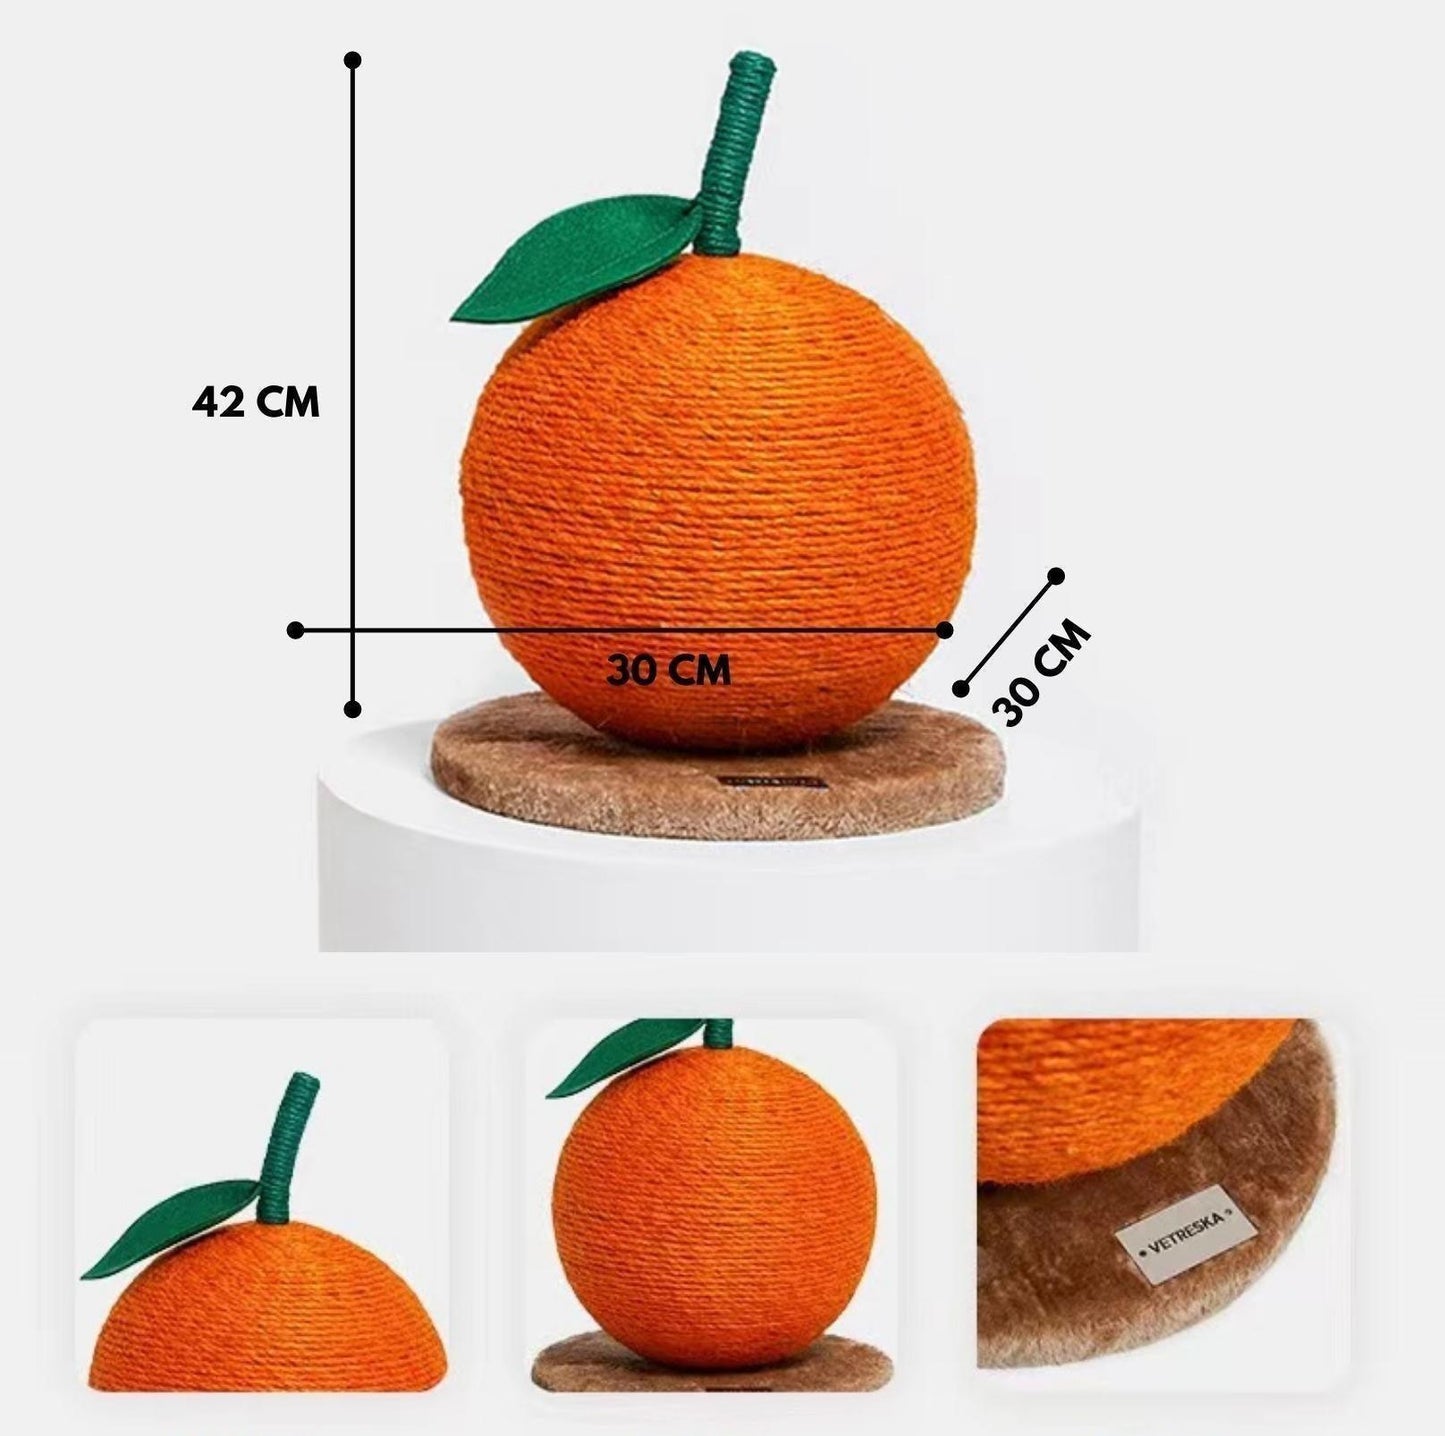 Vetreska Mini Orange Cat Scratcher - {{product.type}} - PawPawUp